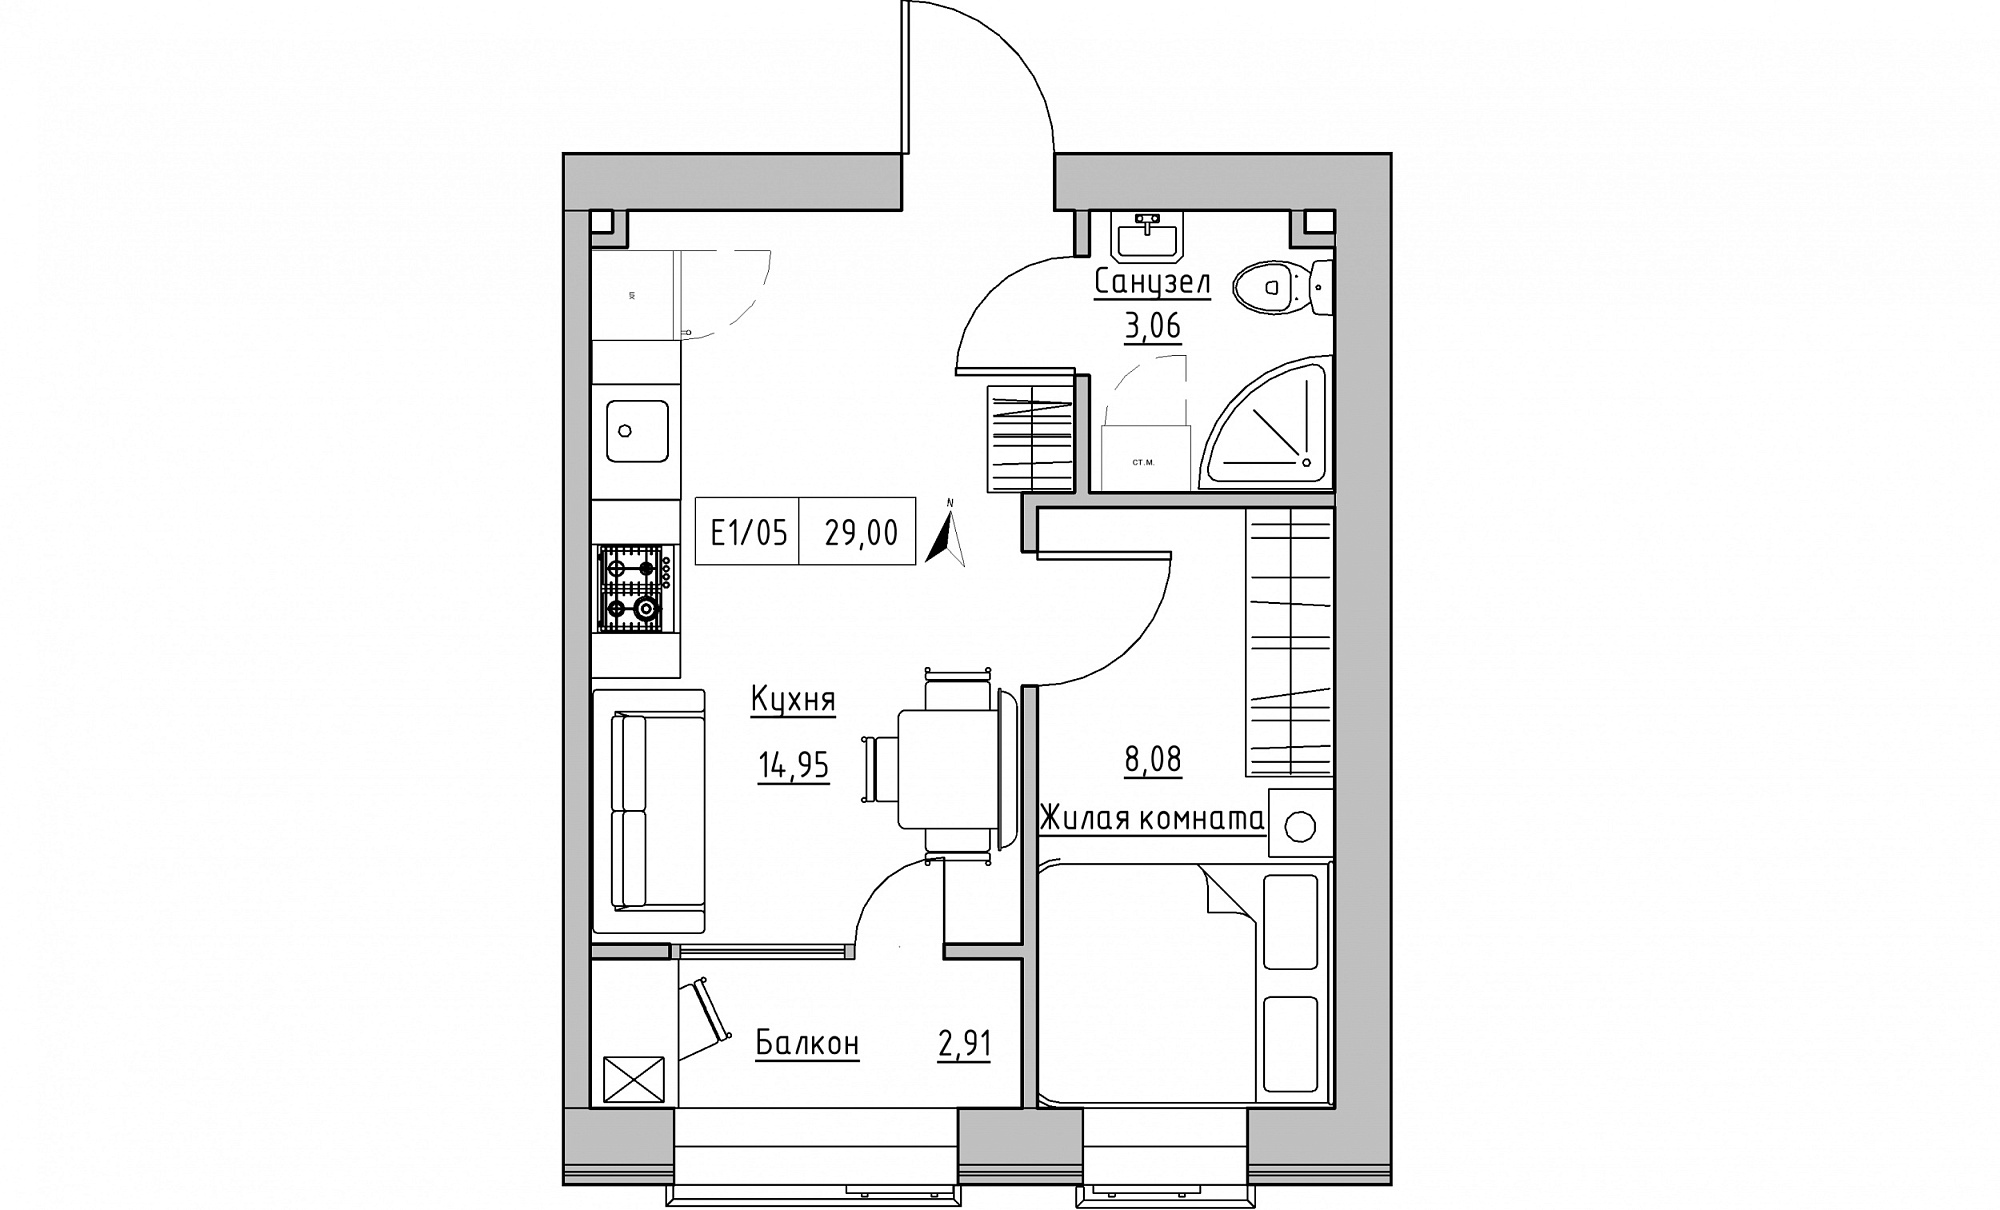 Planning 1-rm flats area 29m2, KS-015-03/0009.